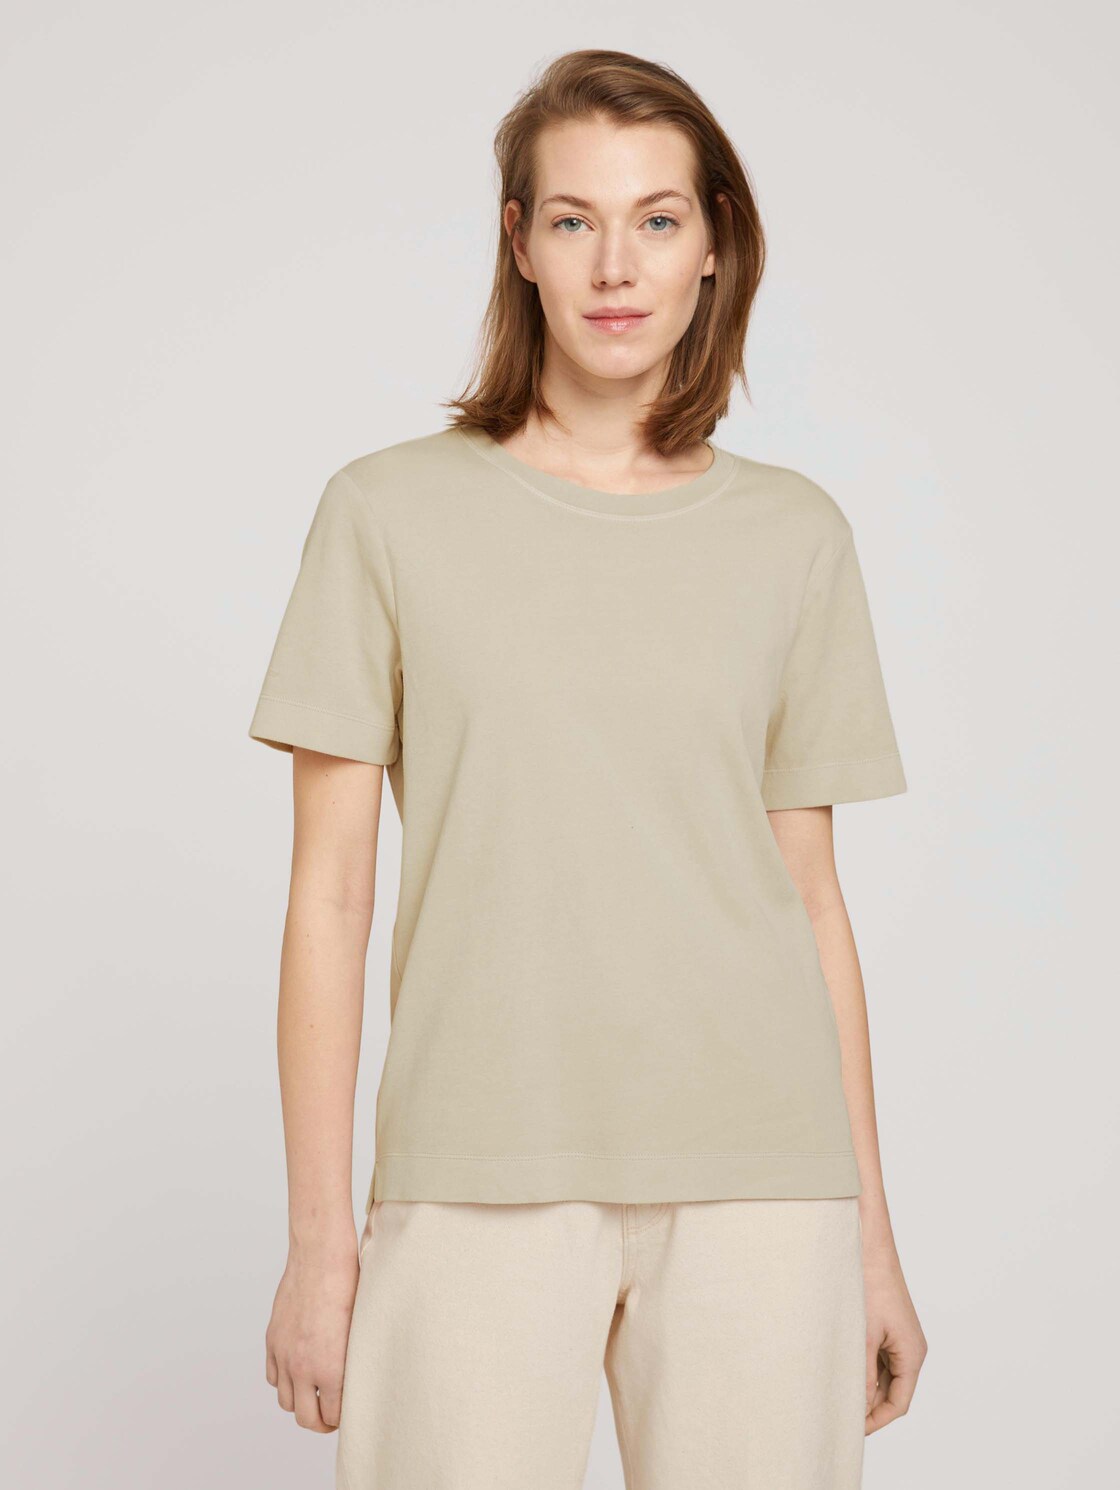 TOM TAILOR Damen Basic T-Shirt, beige, Gr. XXL, baumwolle